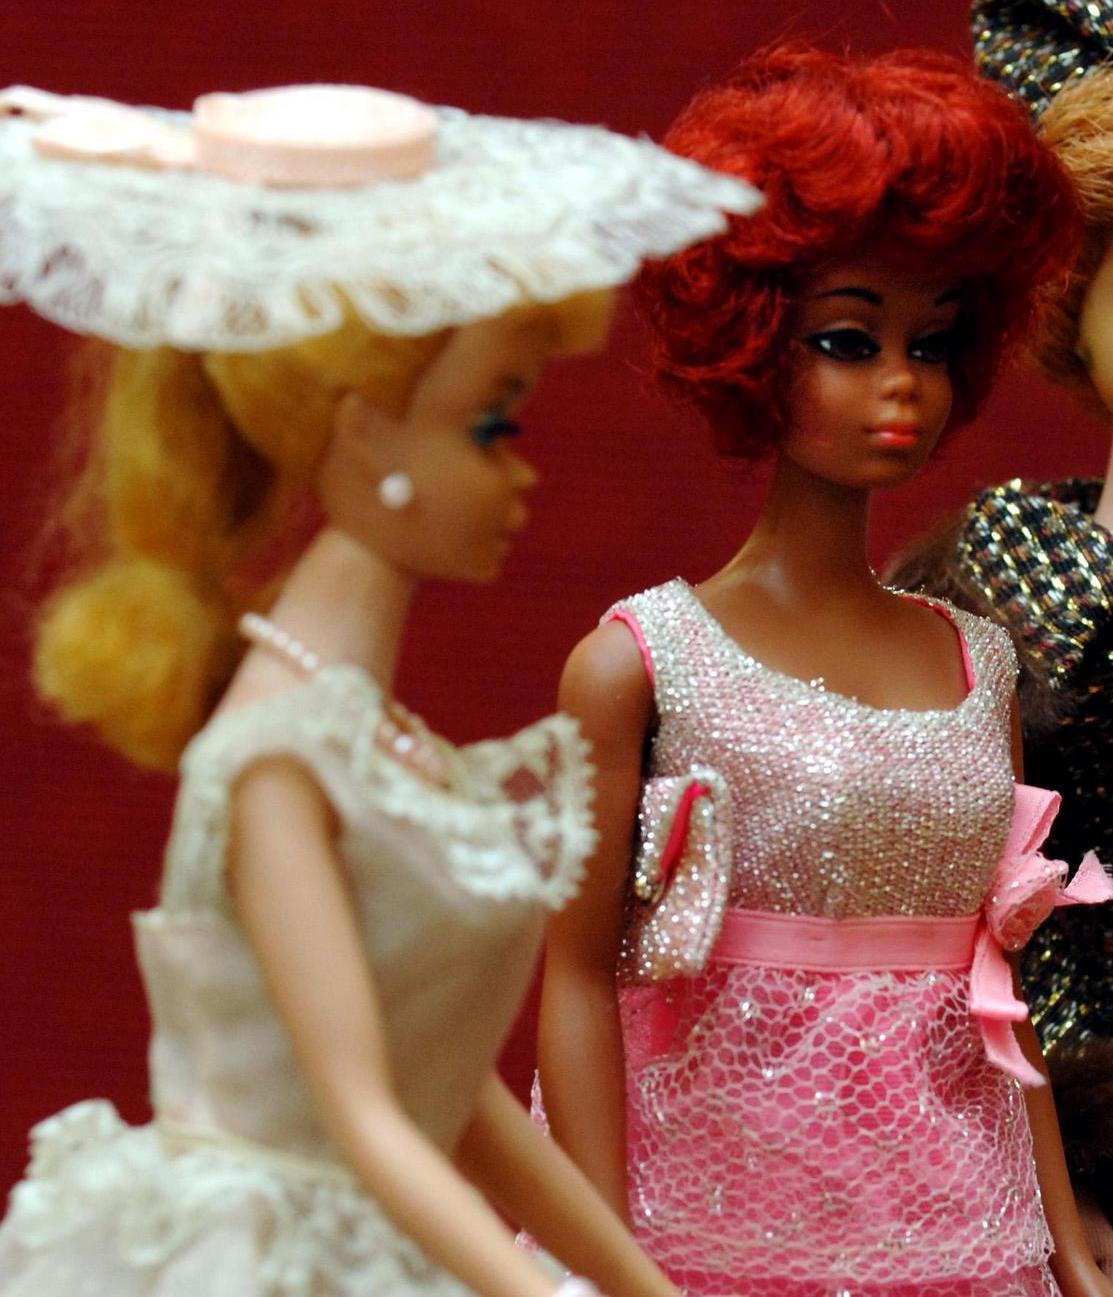 Auction of Barbie dolls